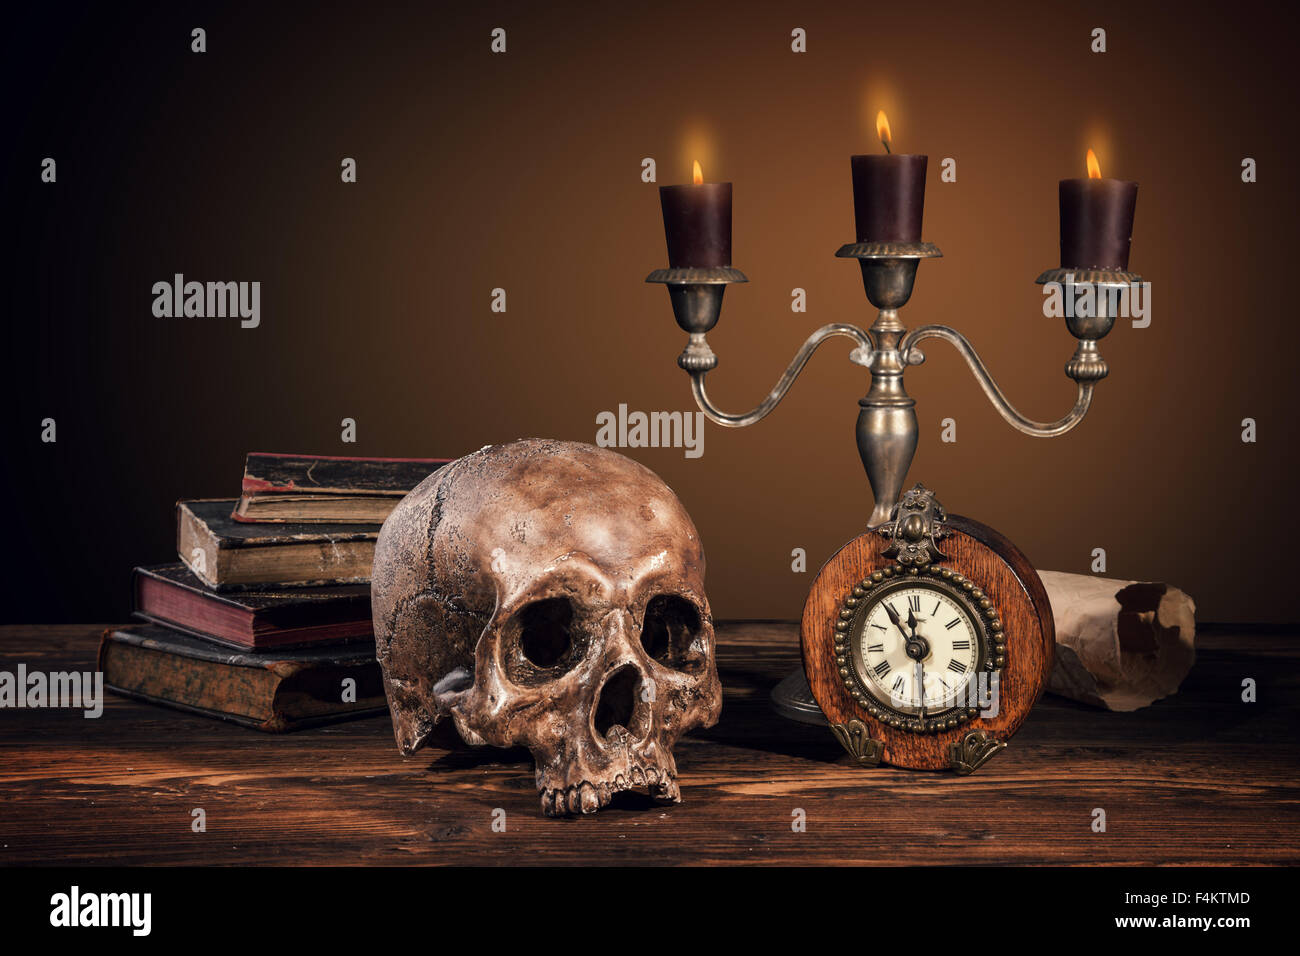 Still Life Art Photography On Human Skull Skeleton Stock Photo Alamy